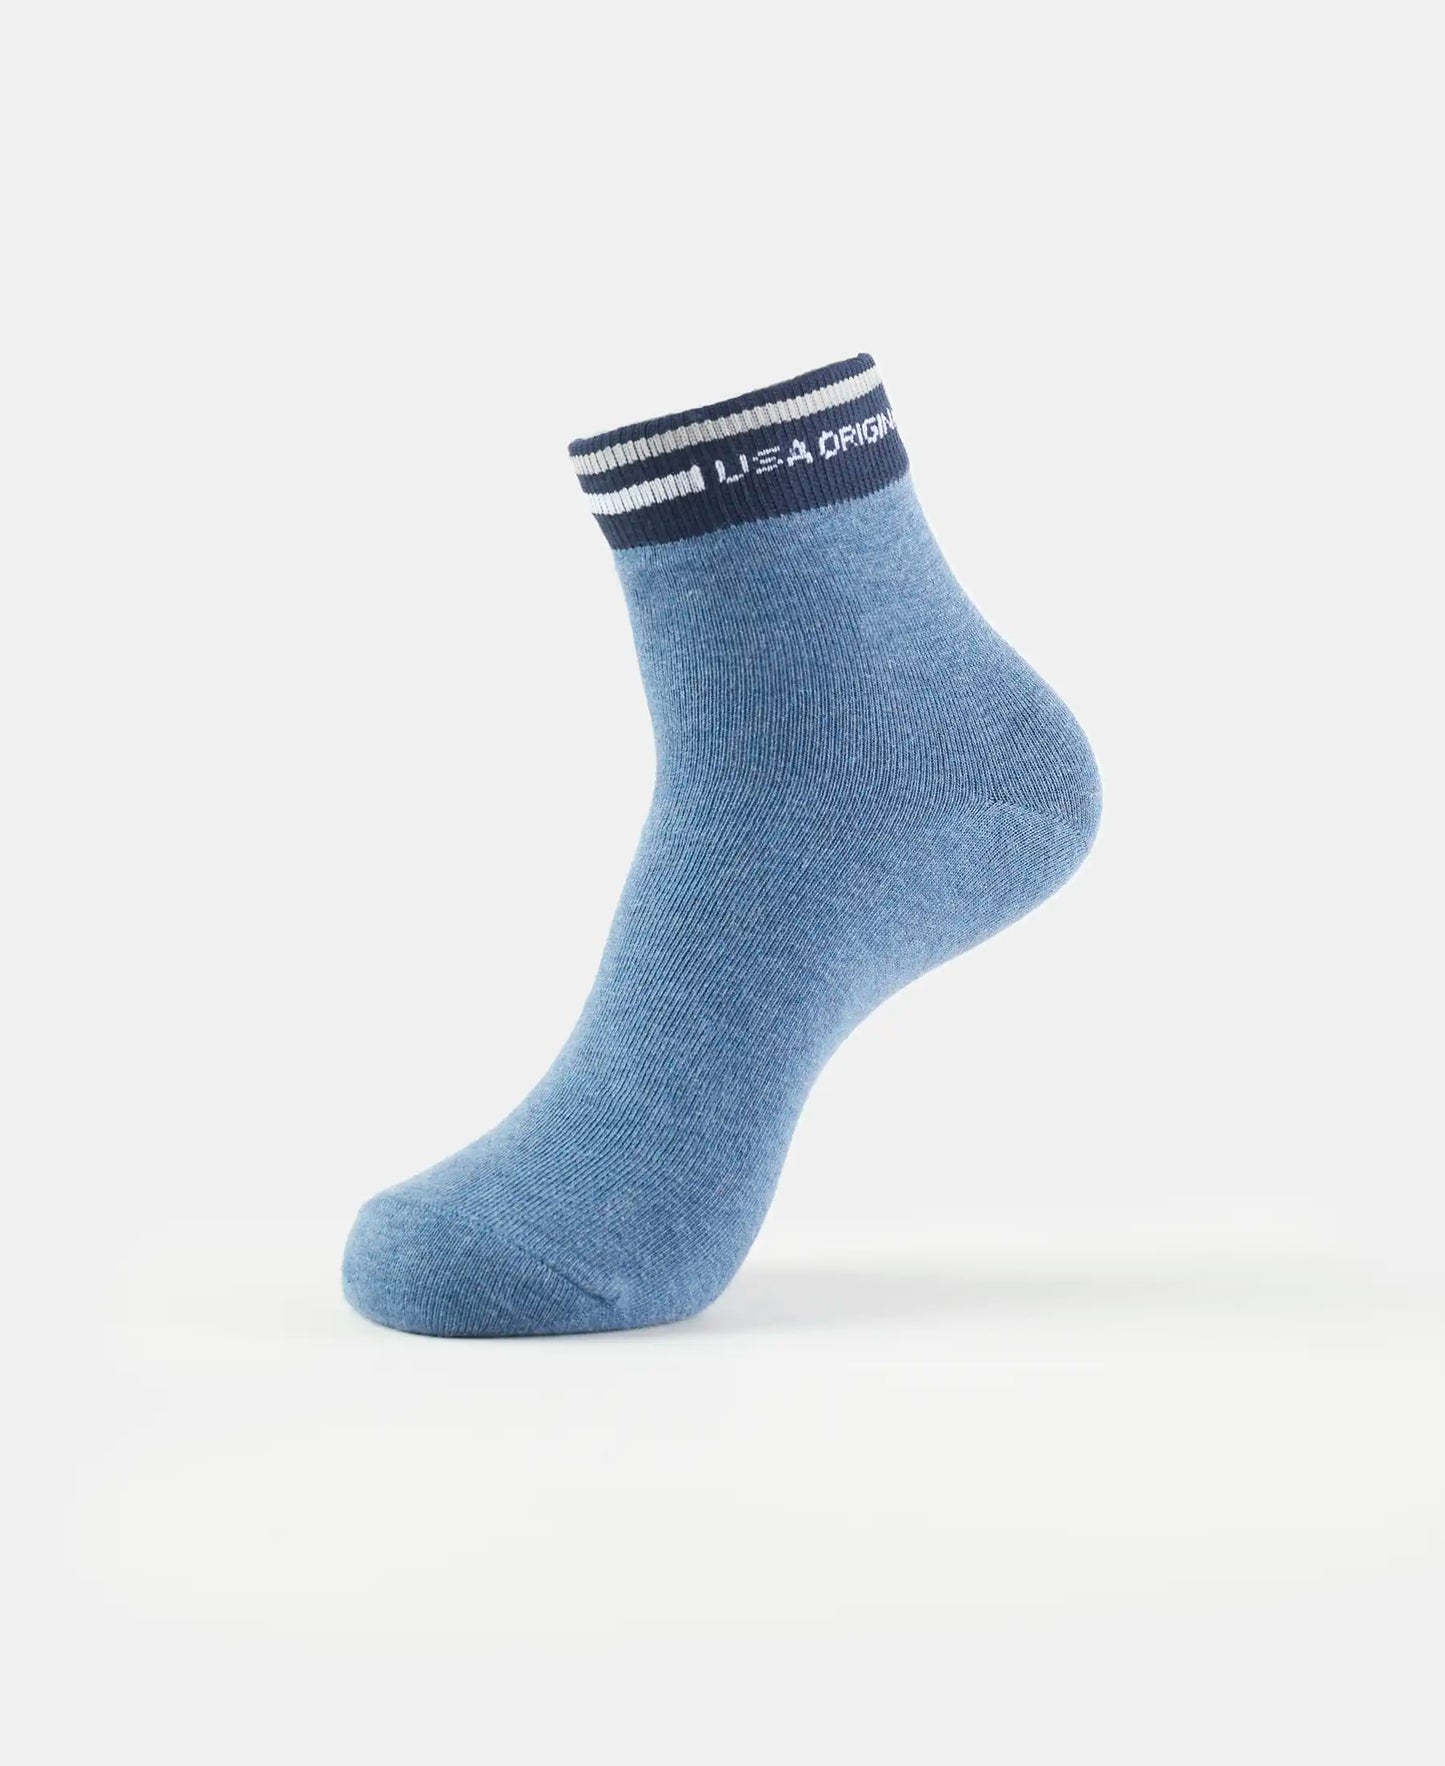 Compact Cotton Ankle Length Socks with StayFresh Treatment - Denim Melange-1